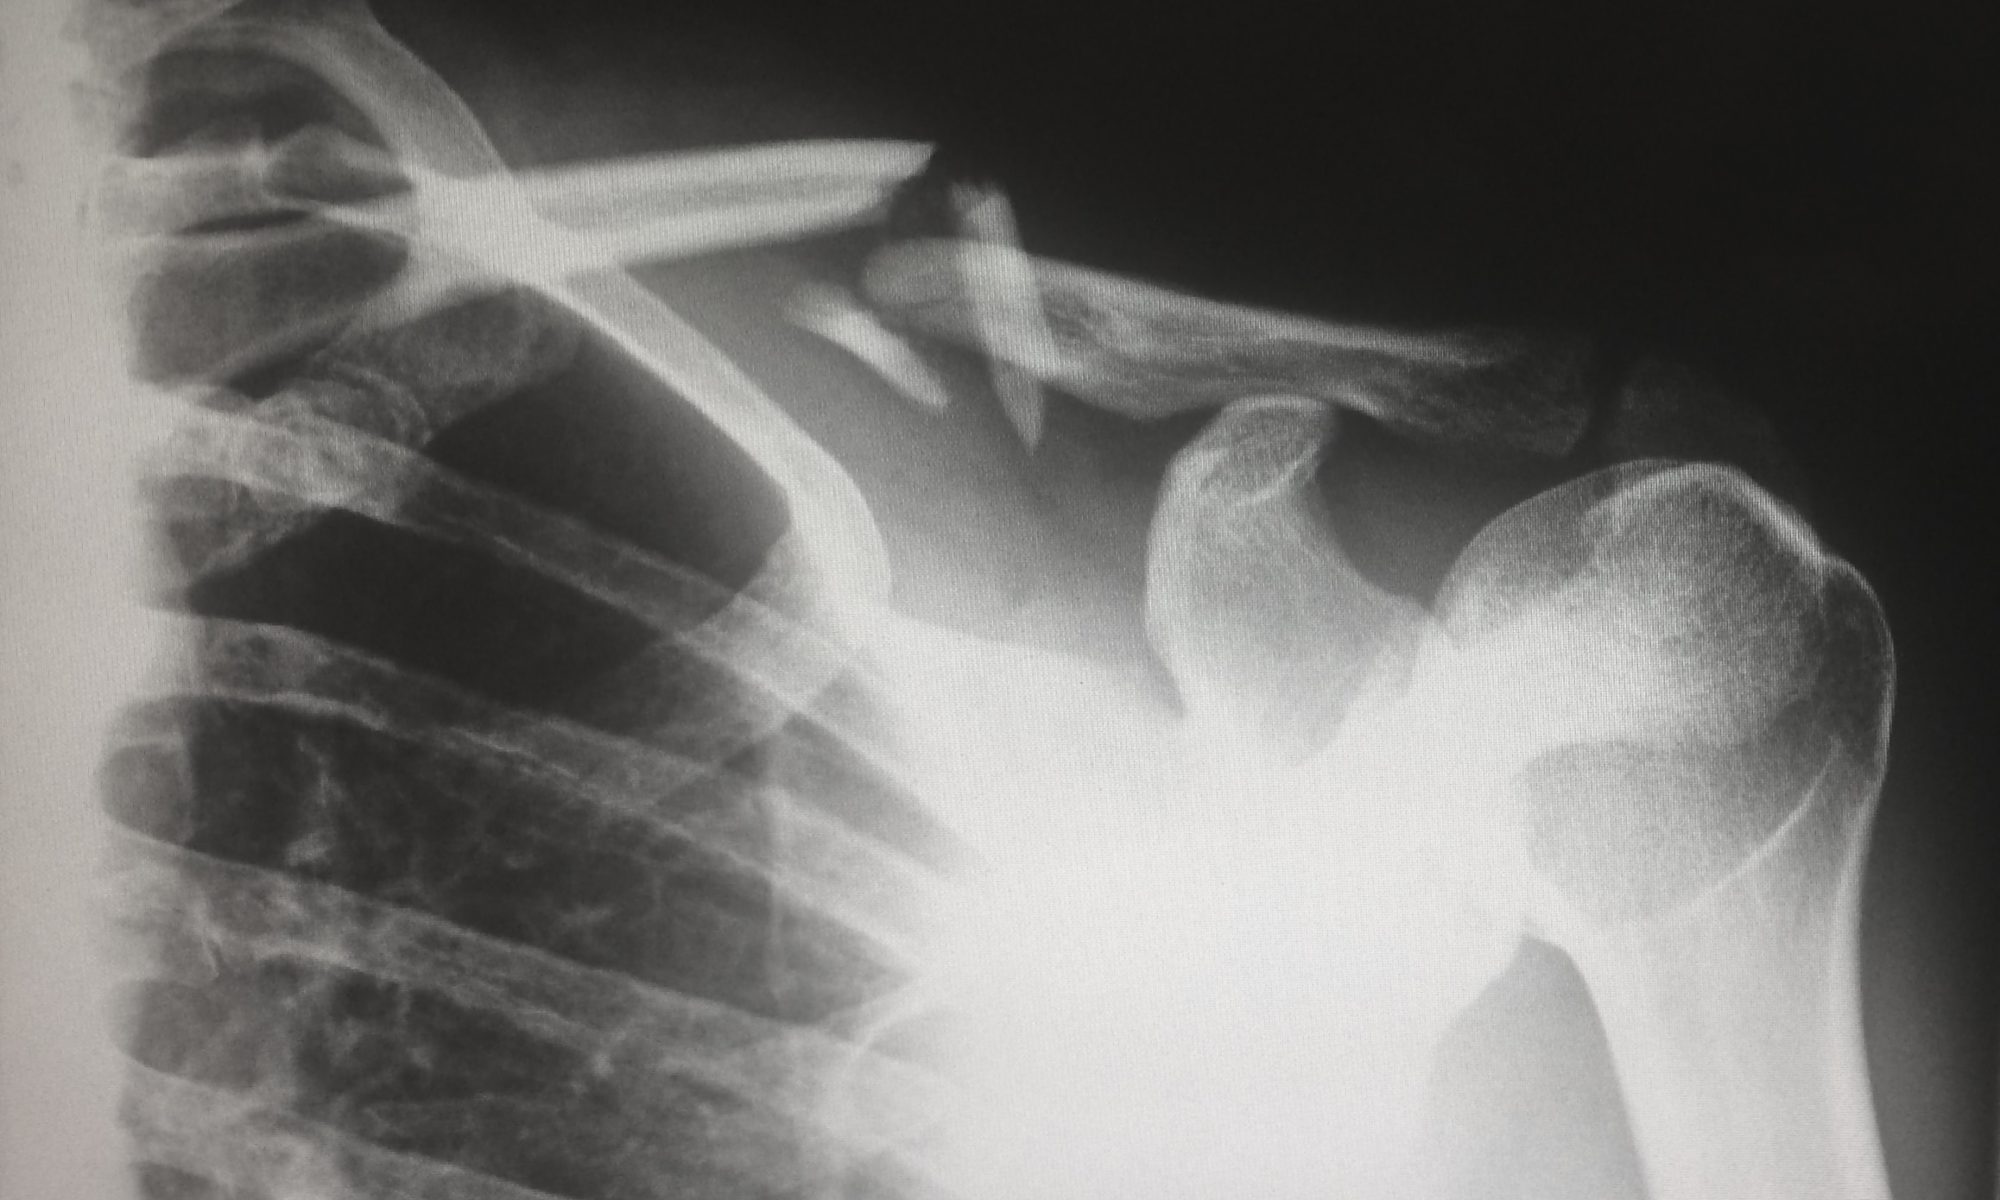 XRAY image of broken collar bone.